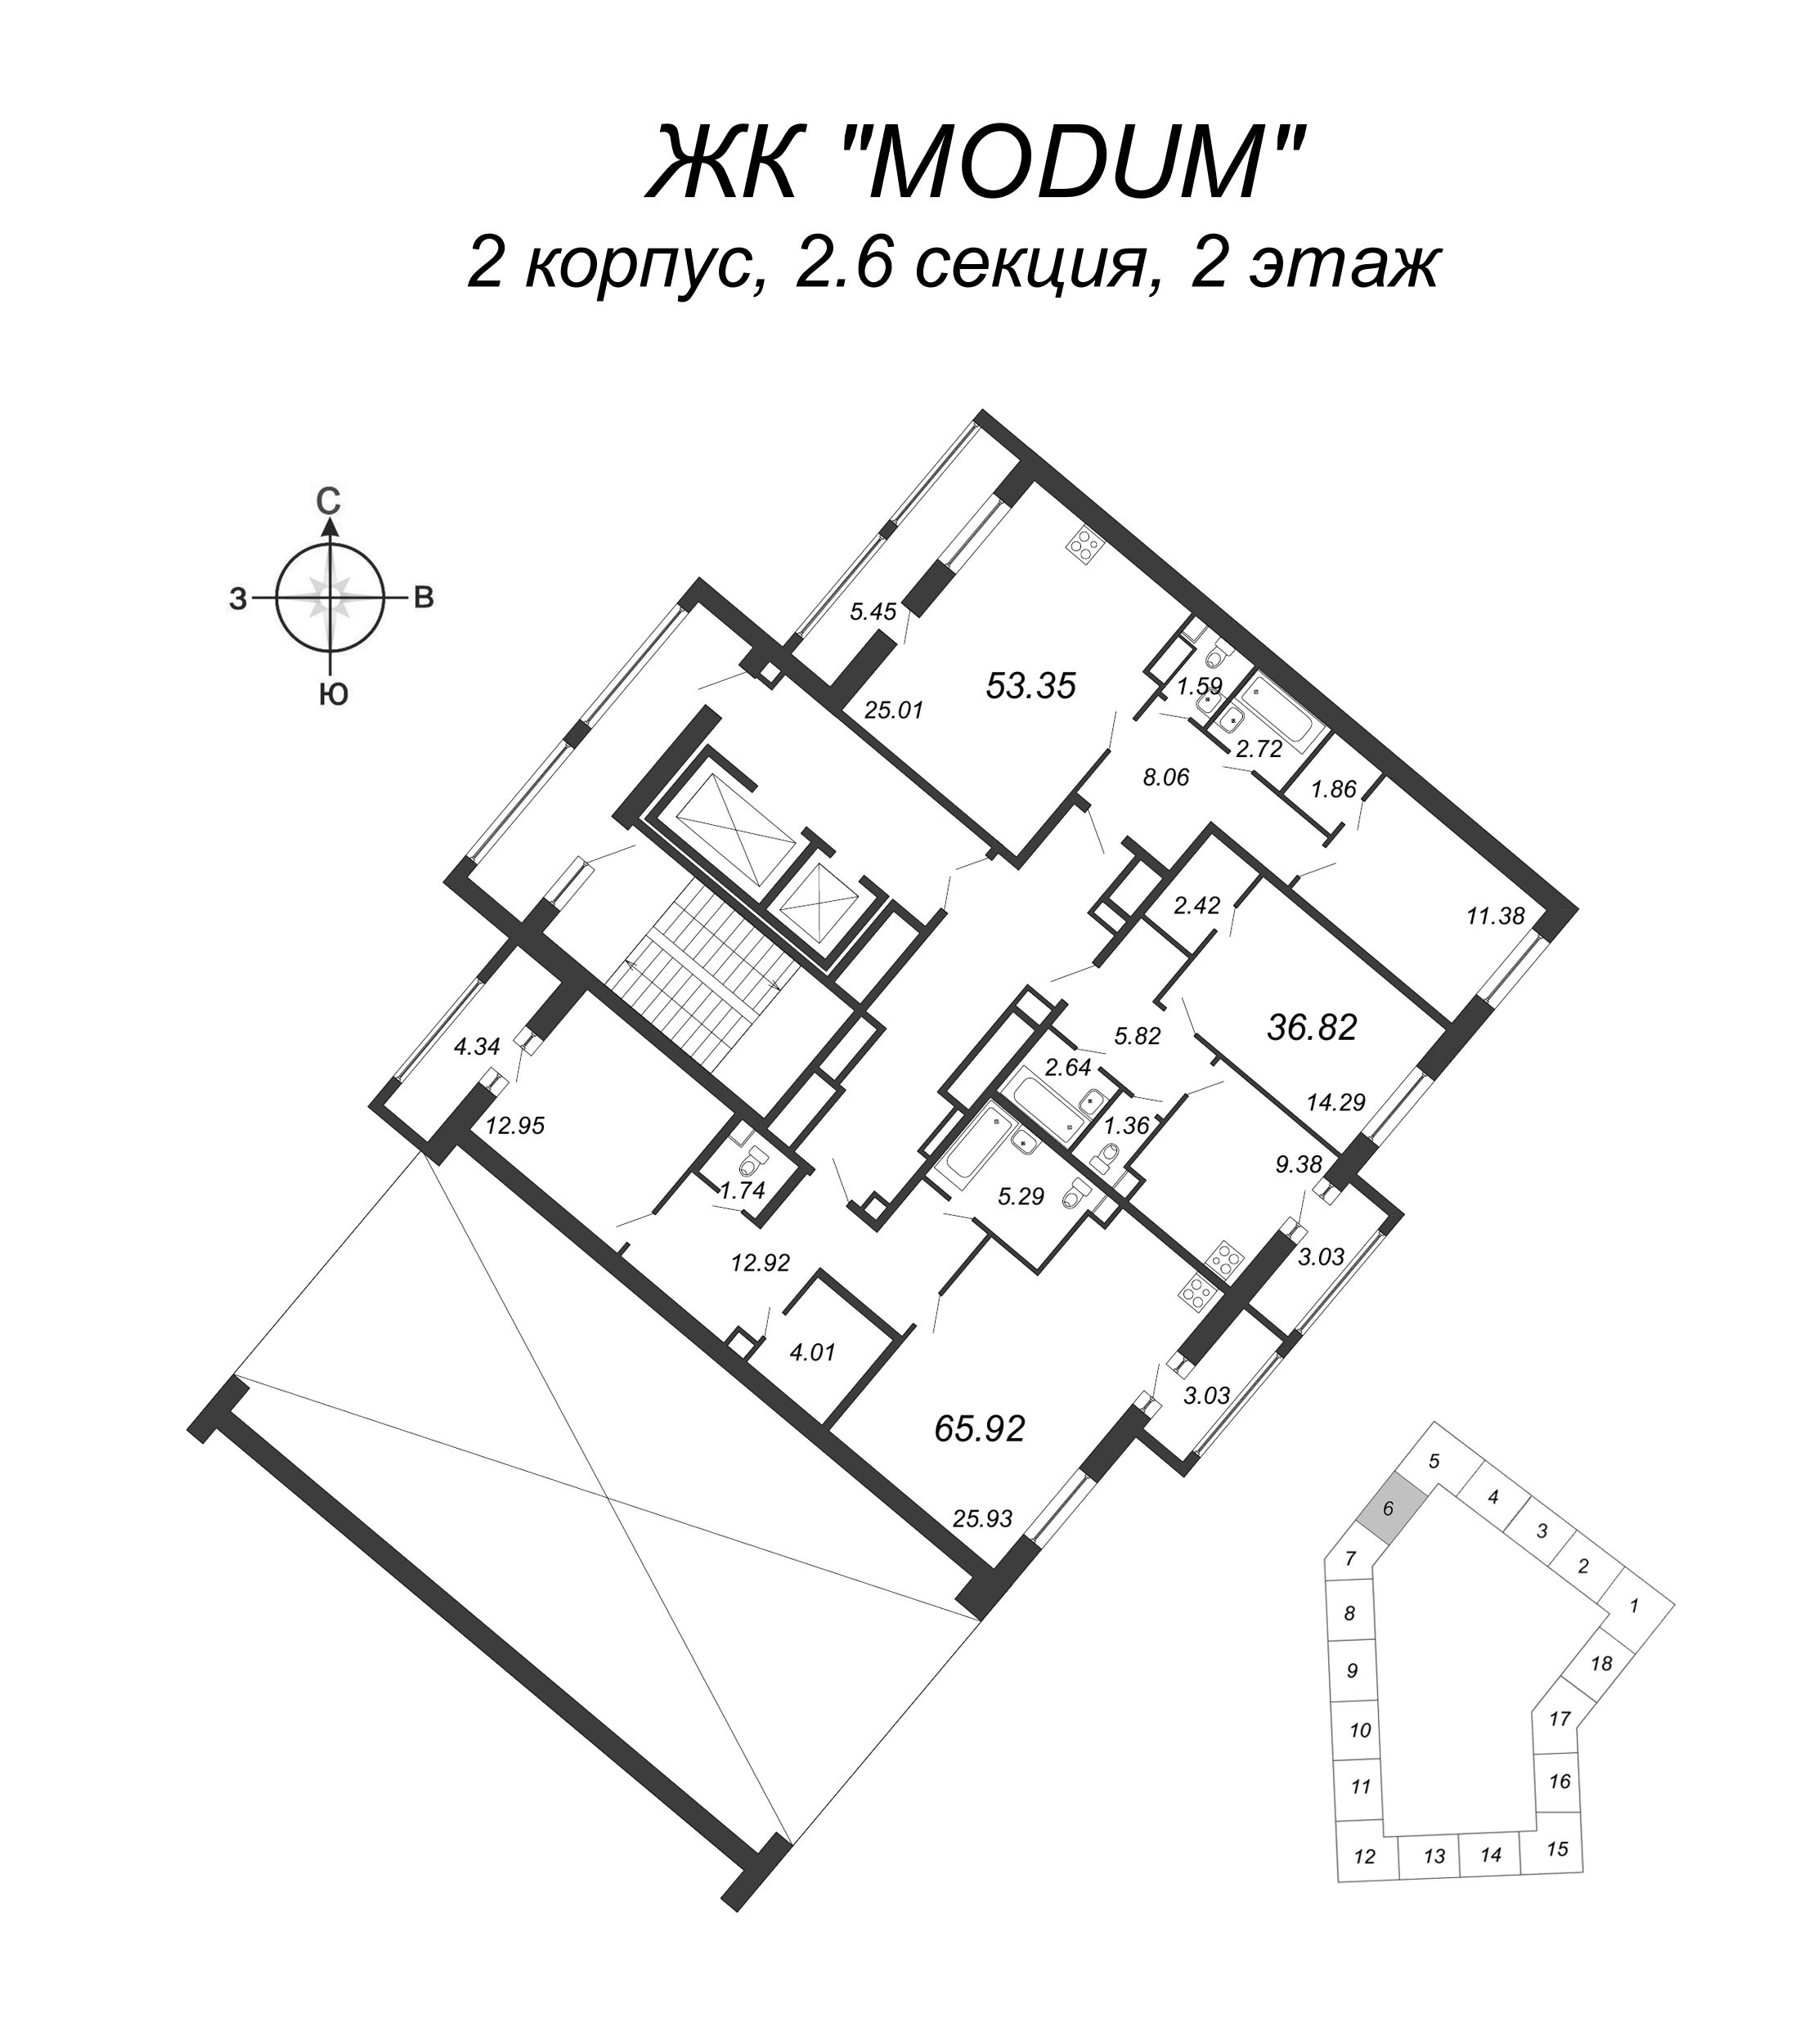 2-комнатная (Евро) квартира, 65.92 м² - планировка этажа